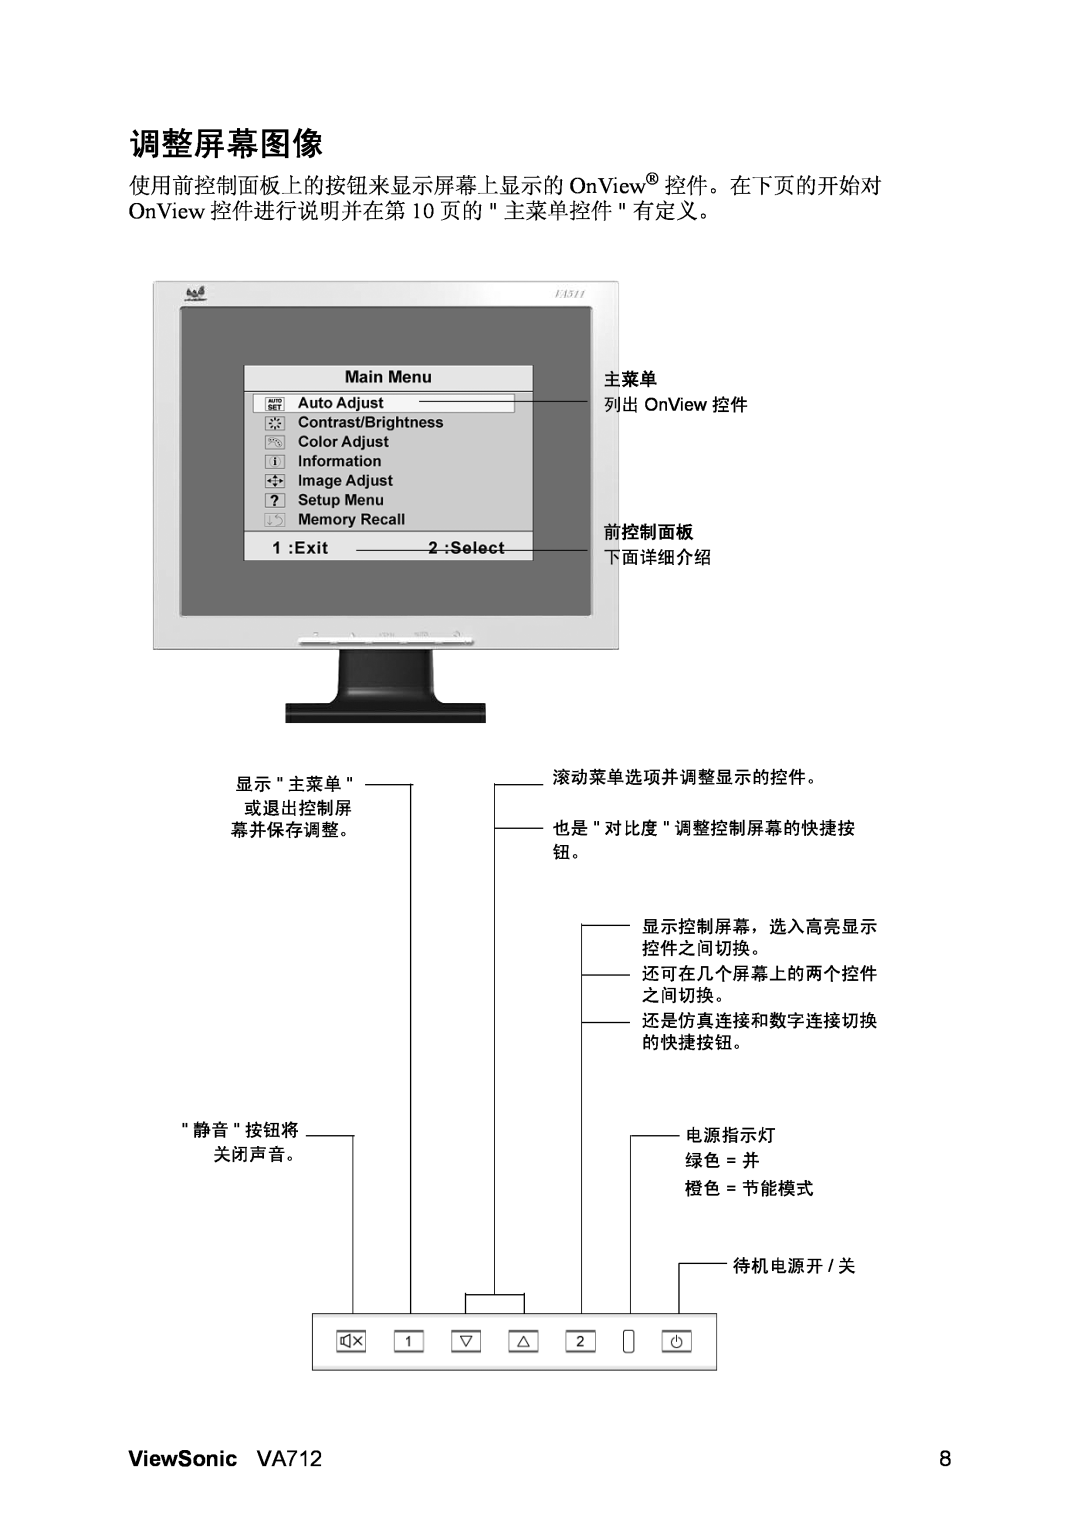 ViewSonic VS10697 manual 调整屏幕图像, ViewSonic VA712, 显示 主菜单 或退出控制屏 幕并保存调整。 静音 按钮将 关闭声音。, 列出 OnView 控件, 前控制面板, 待机电源开 / 关 